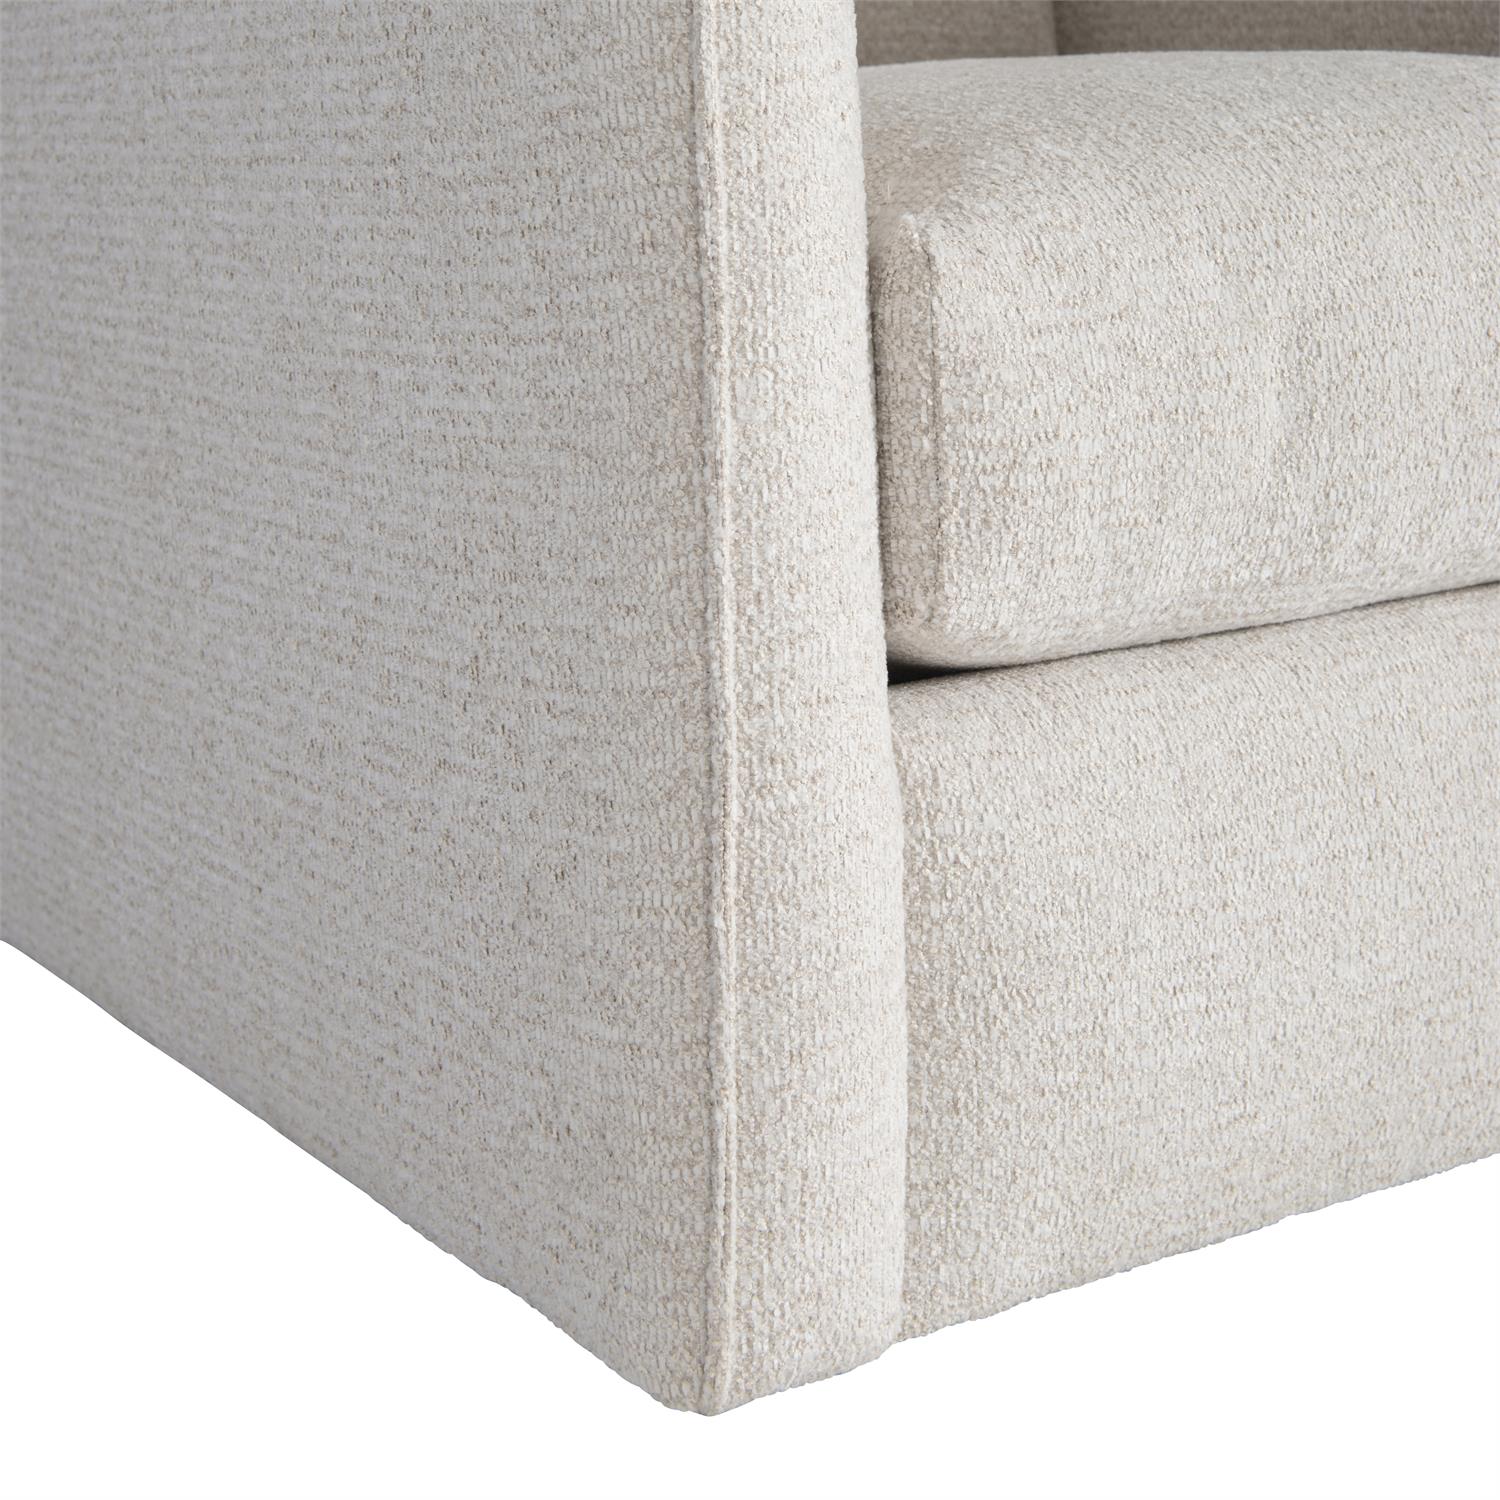 1328-002 Fabric | Bernhardt Lille Fabric Swivel Chair | Valley Ridge Furniture